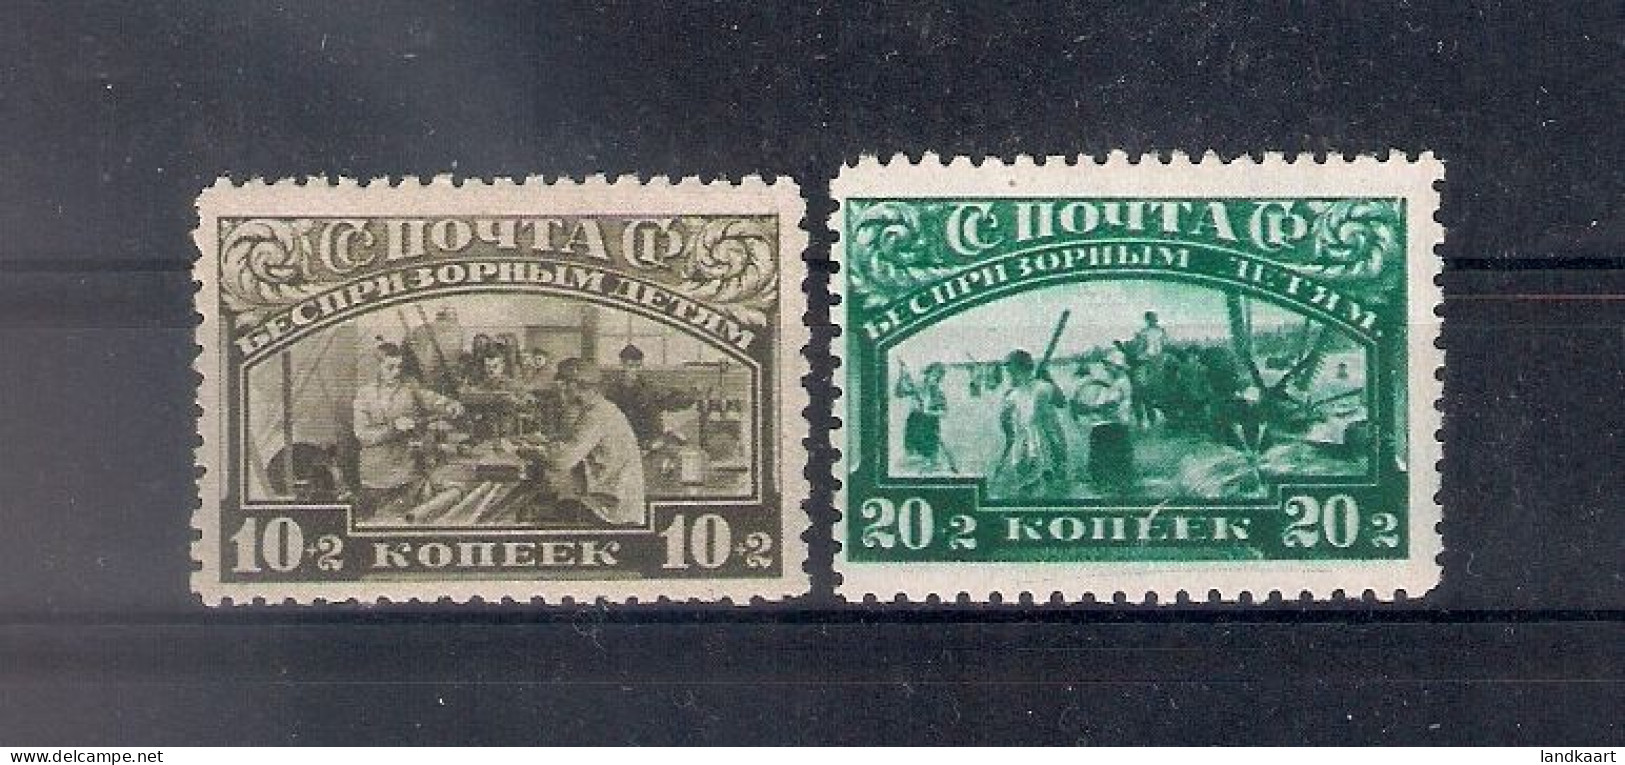 Russia 1930, Michel Nr 383-84, MLH OG - Neufs